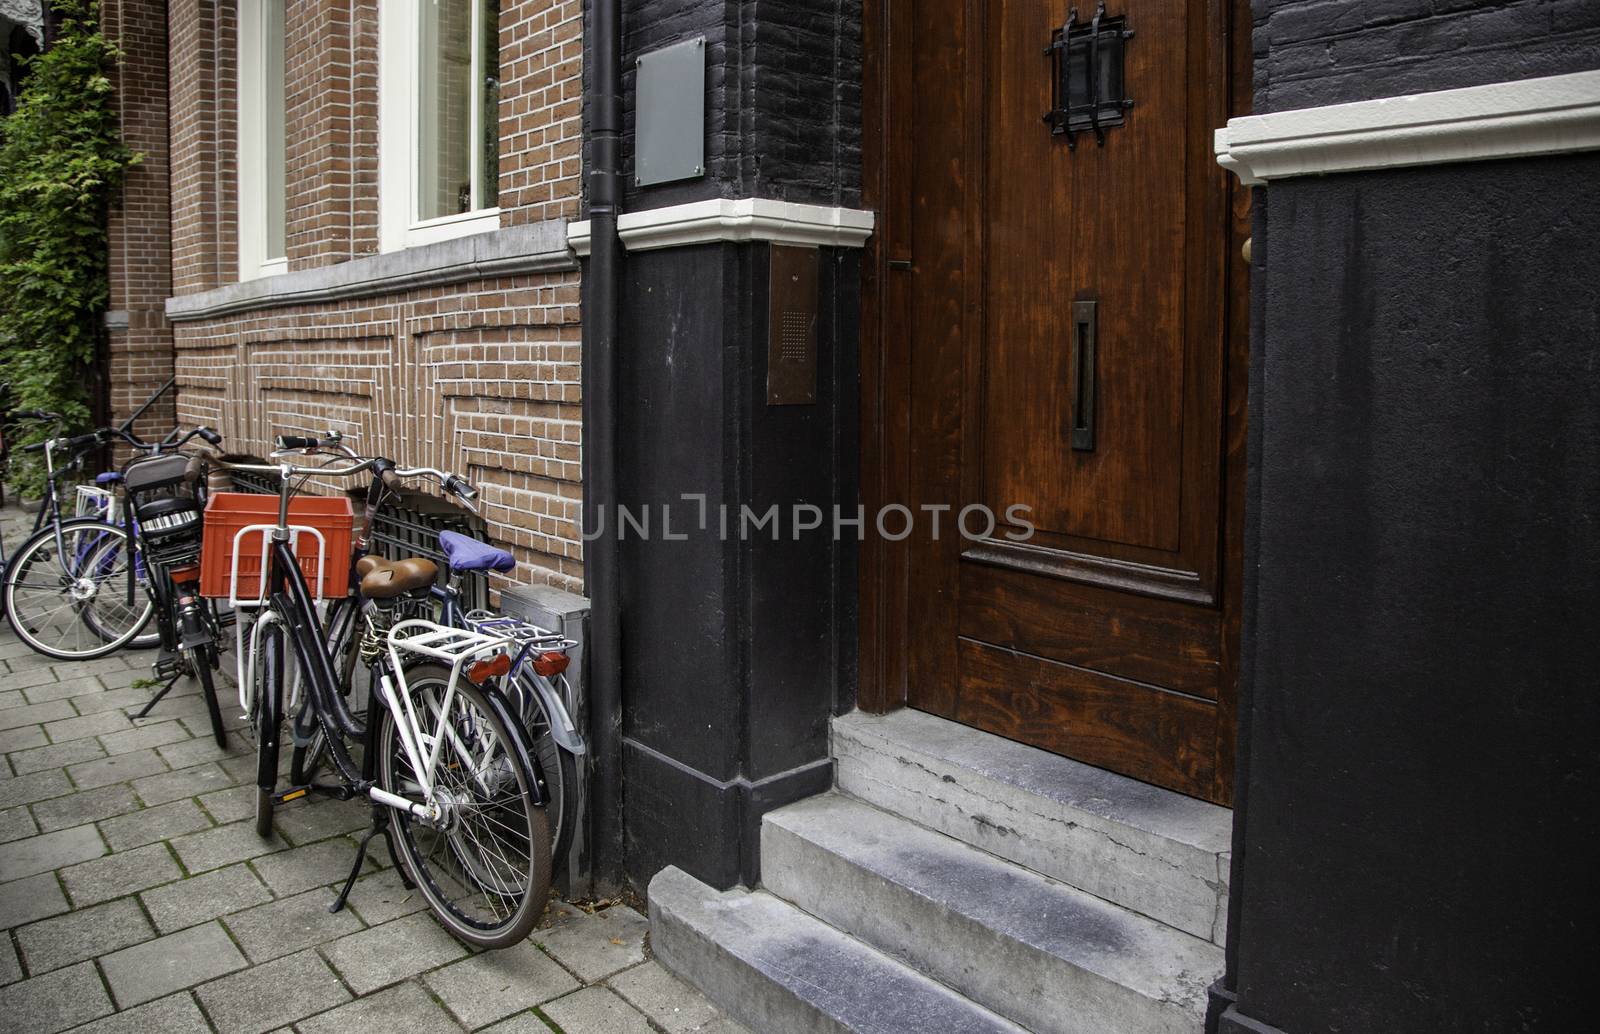 Amsterdam alley, Dutch city street, tourism in europe